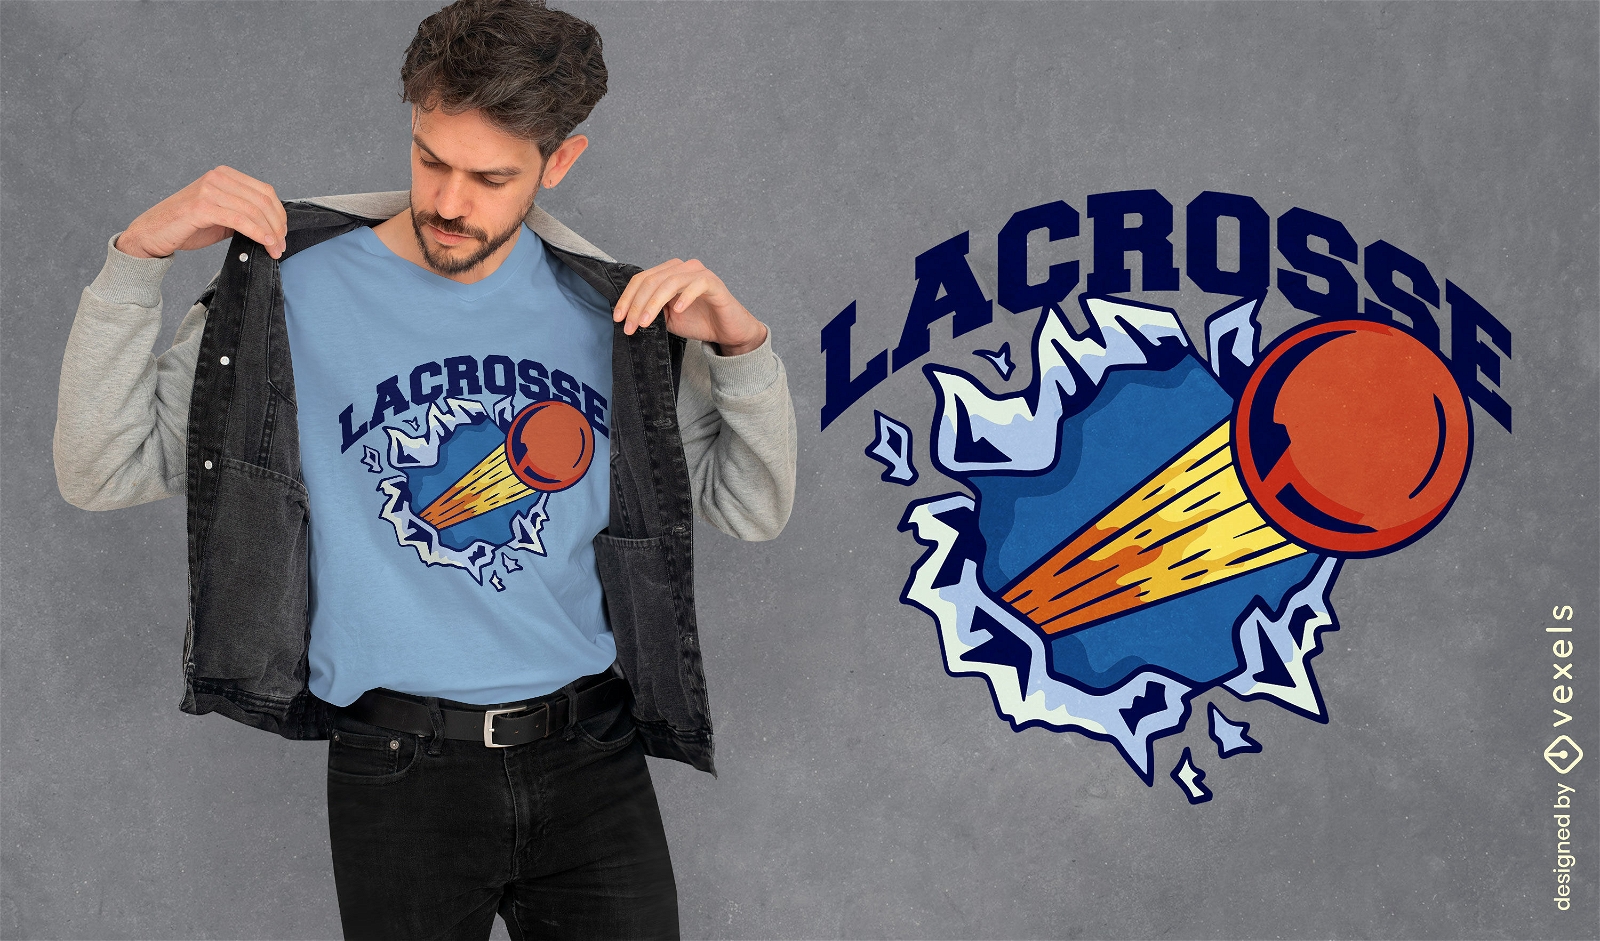 Lacrosse wild t-shirt design